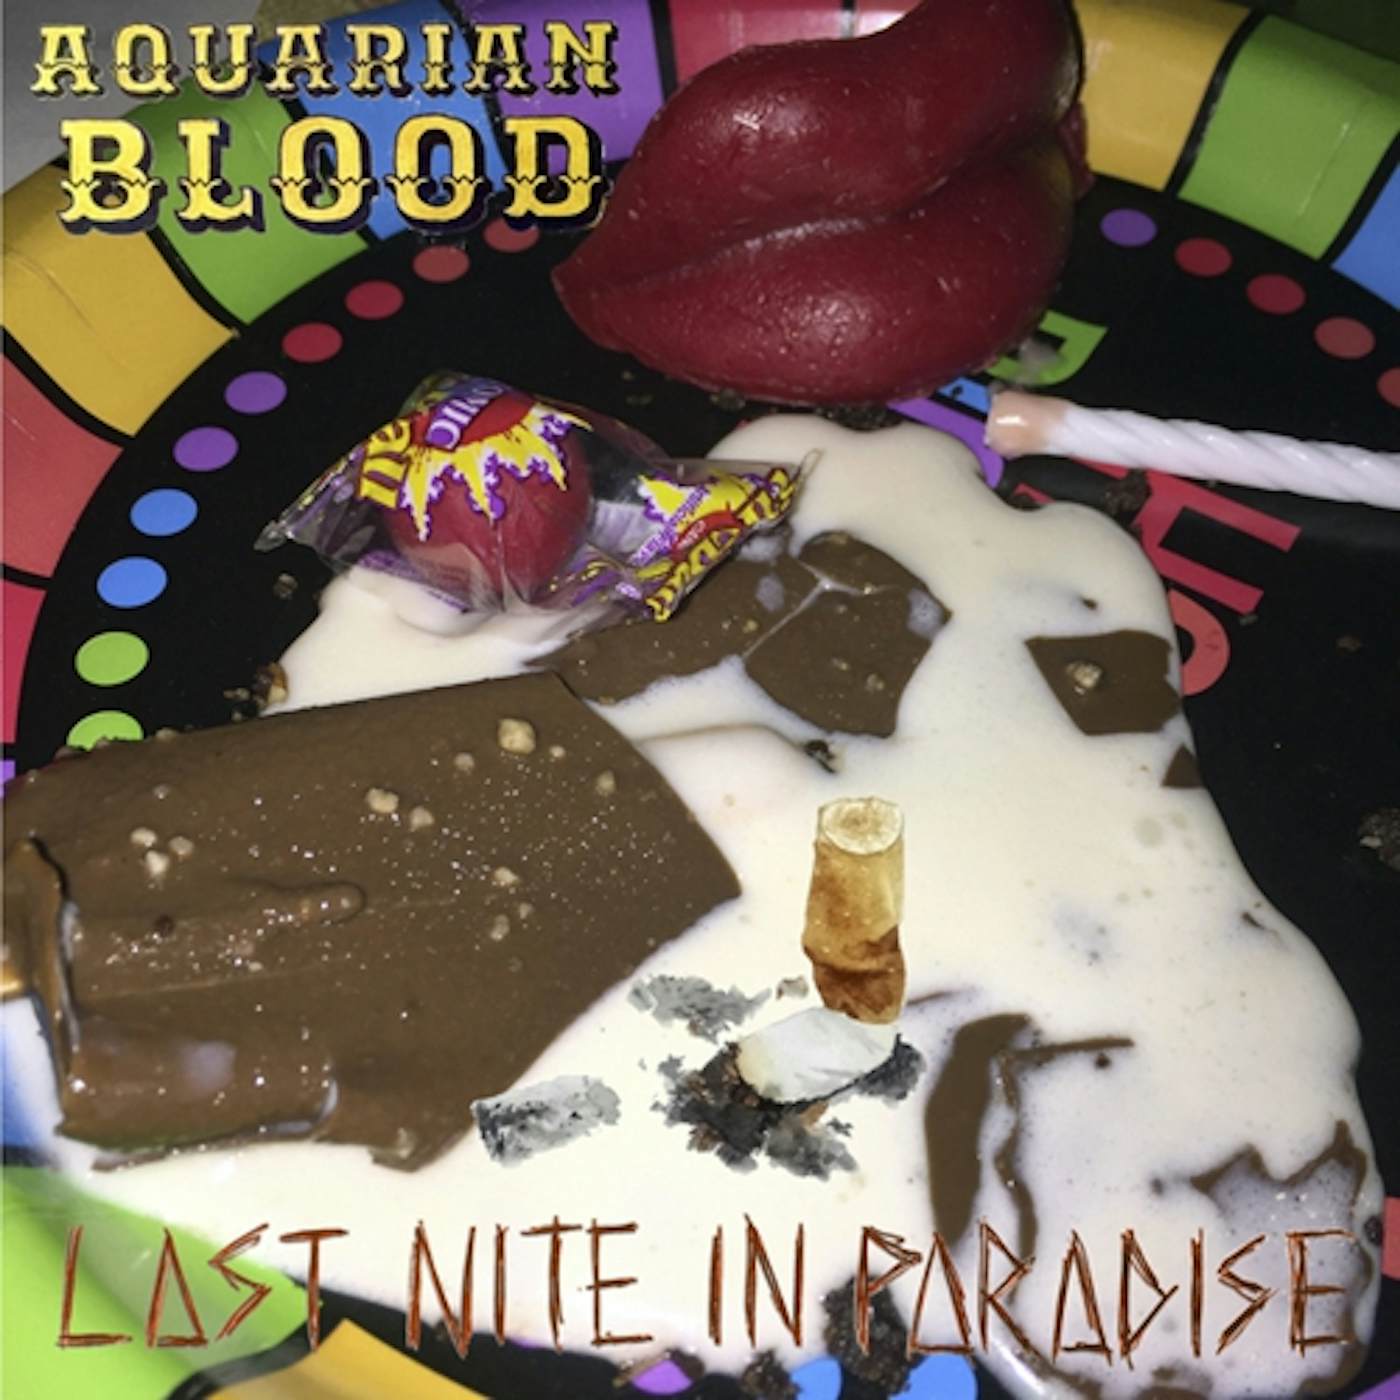 Aquarian Blood Last Nite in Paradise Vinyl Record